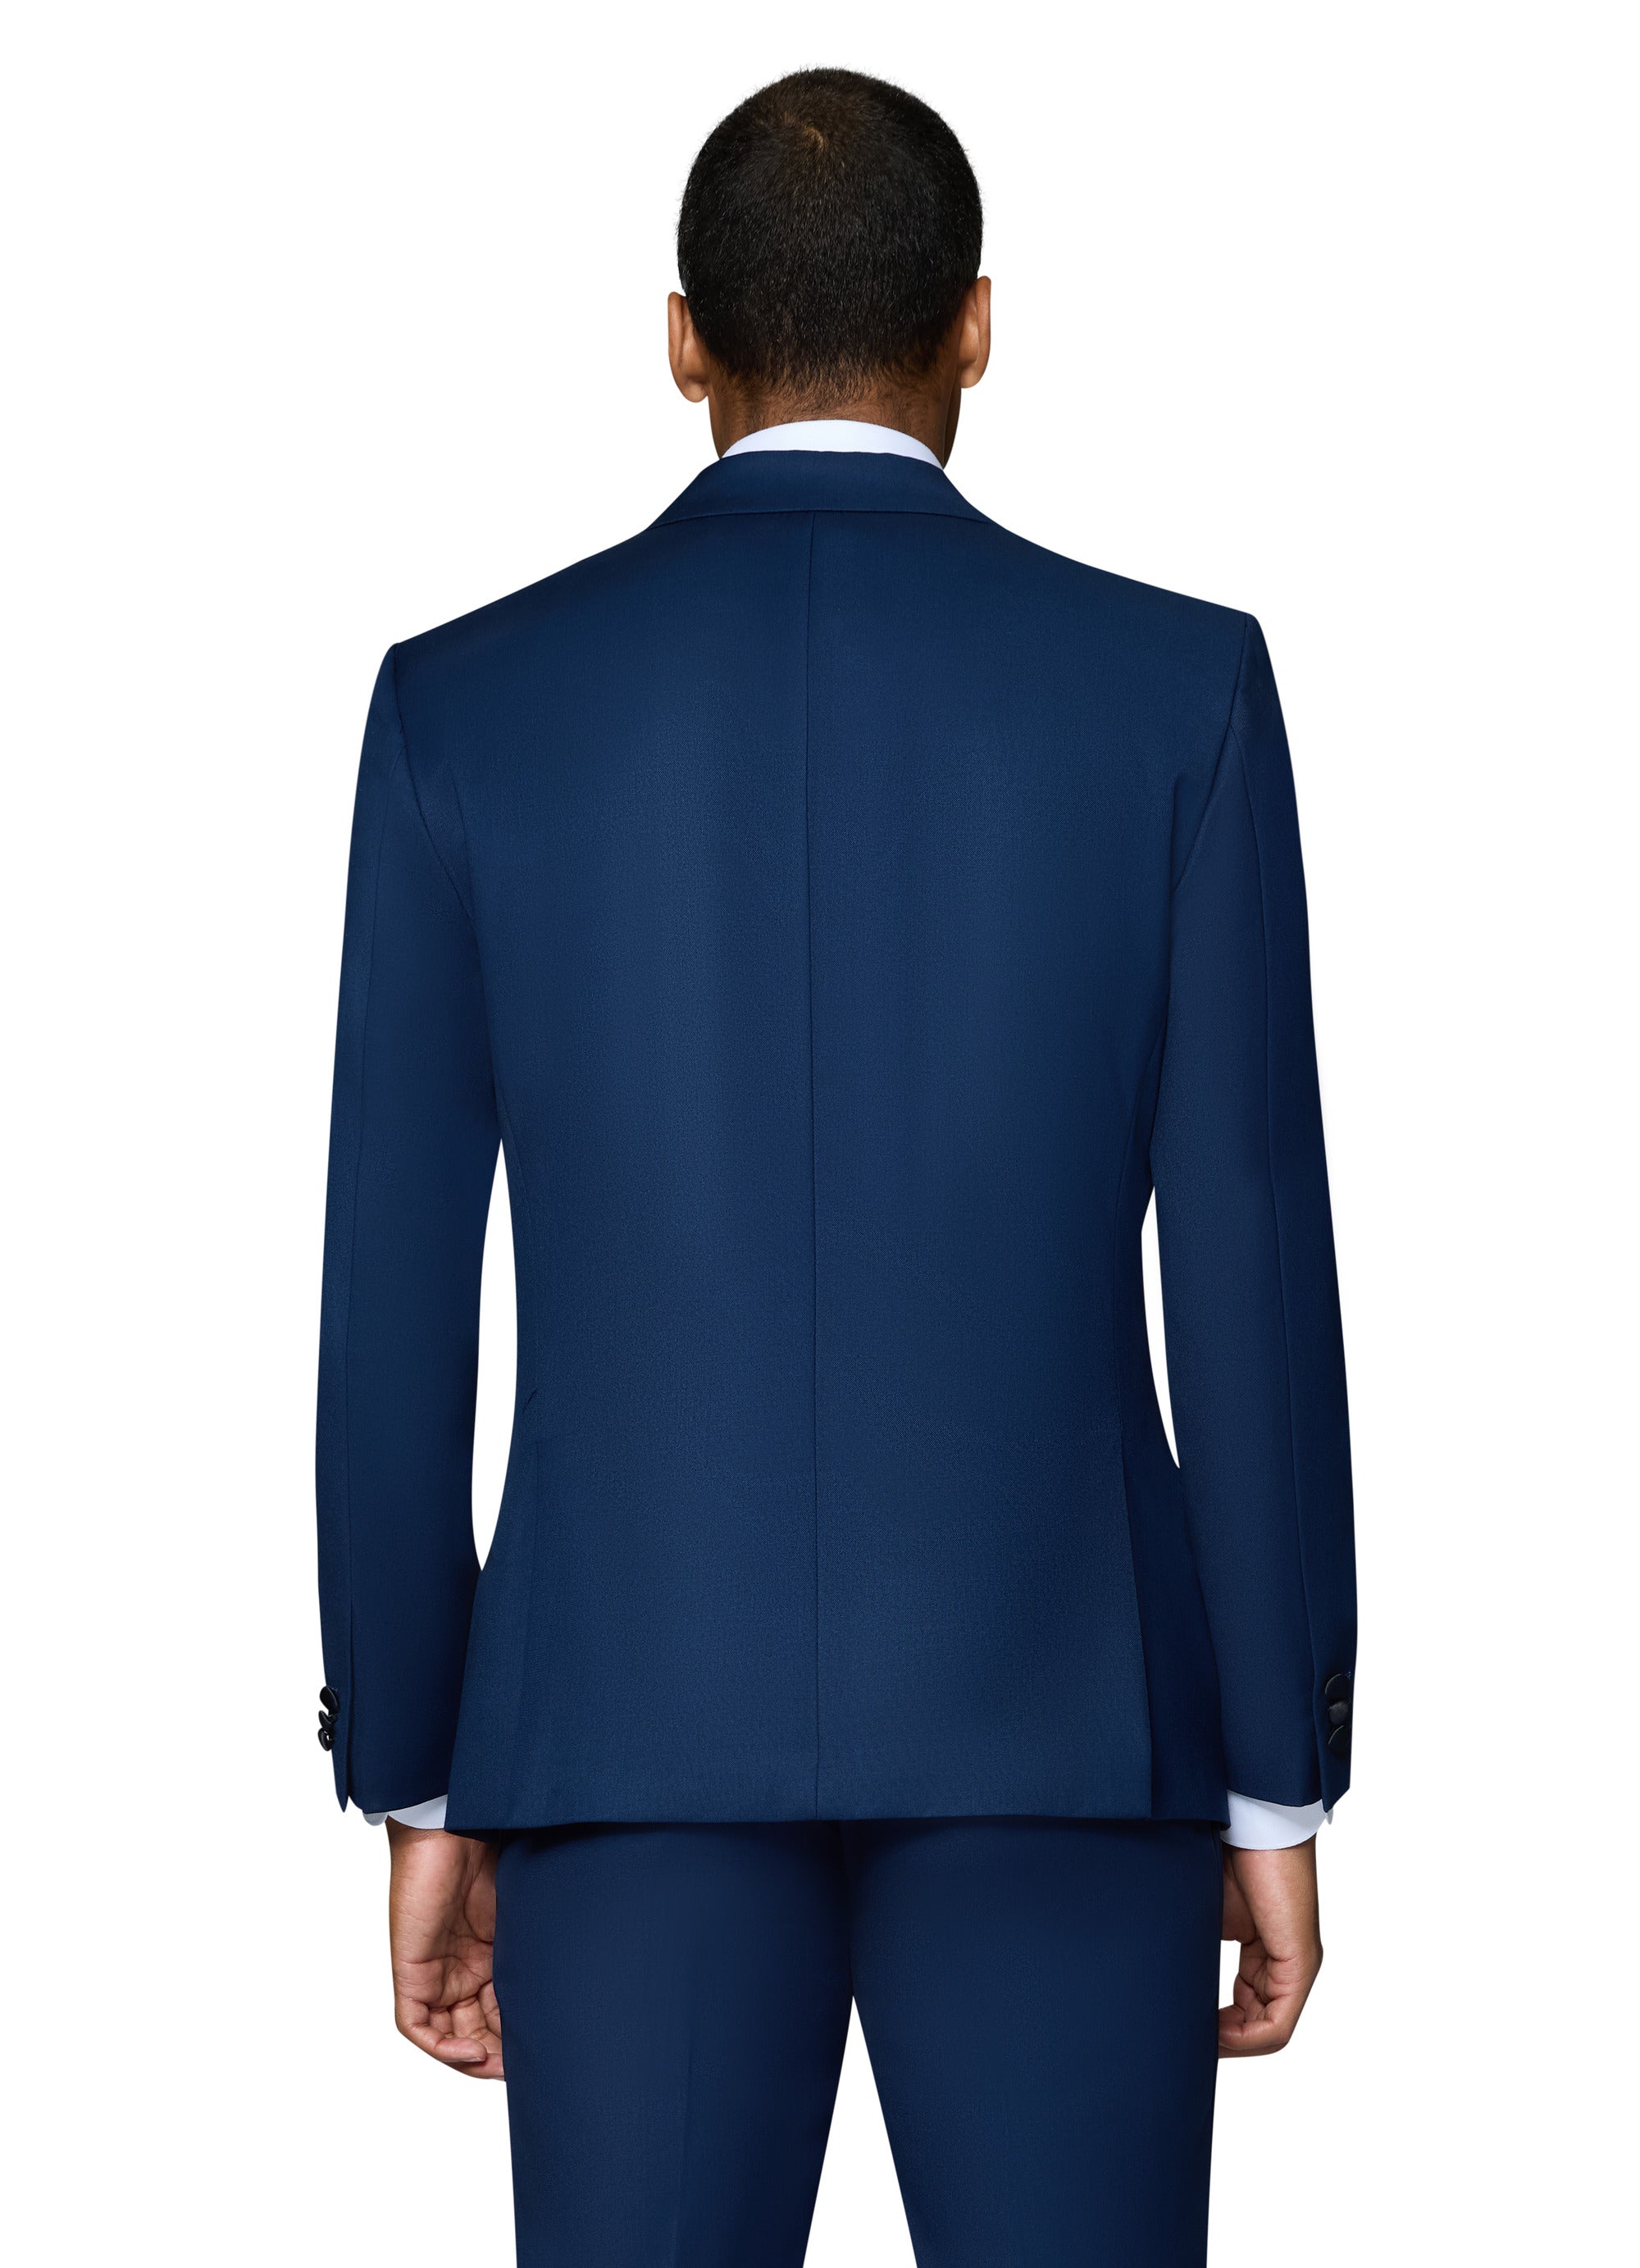 Berragamo Solid New Blue Notch Tuxedo Modern Fit